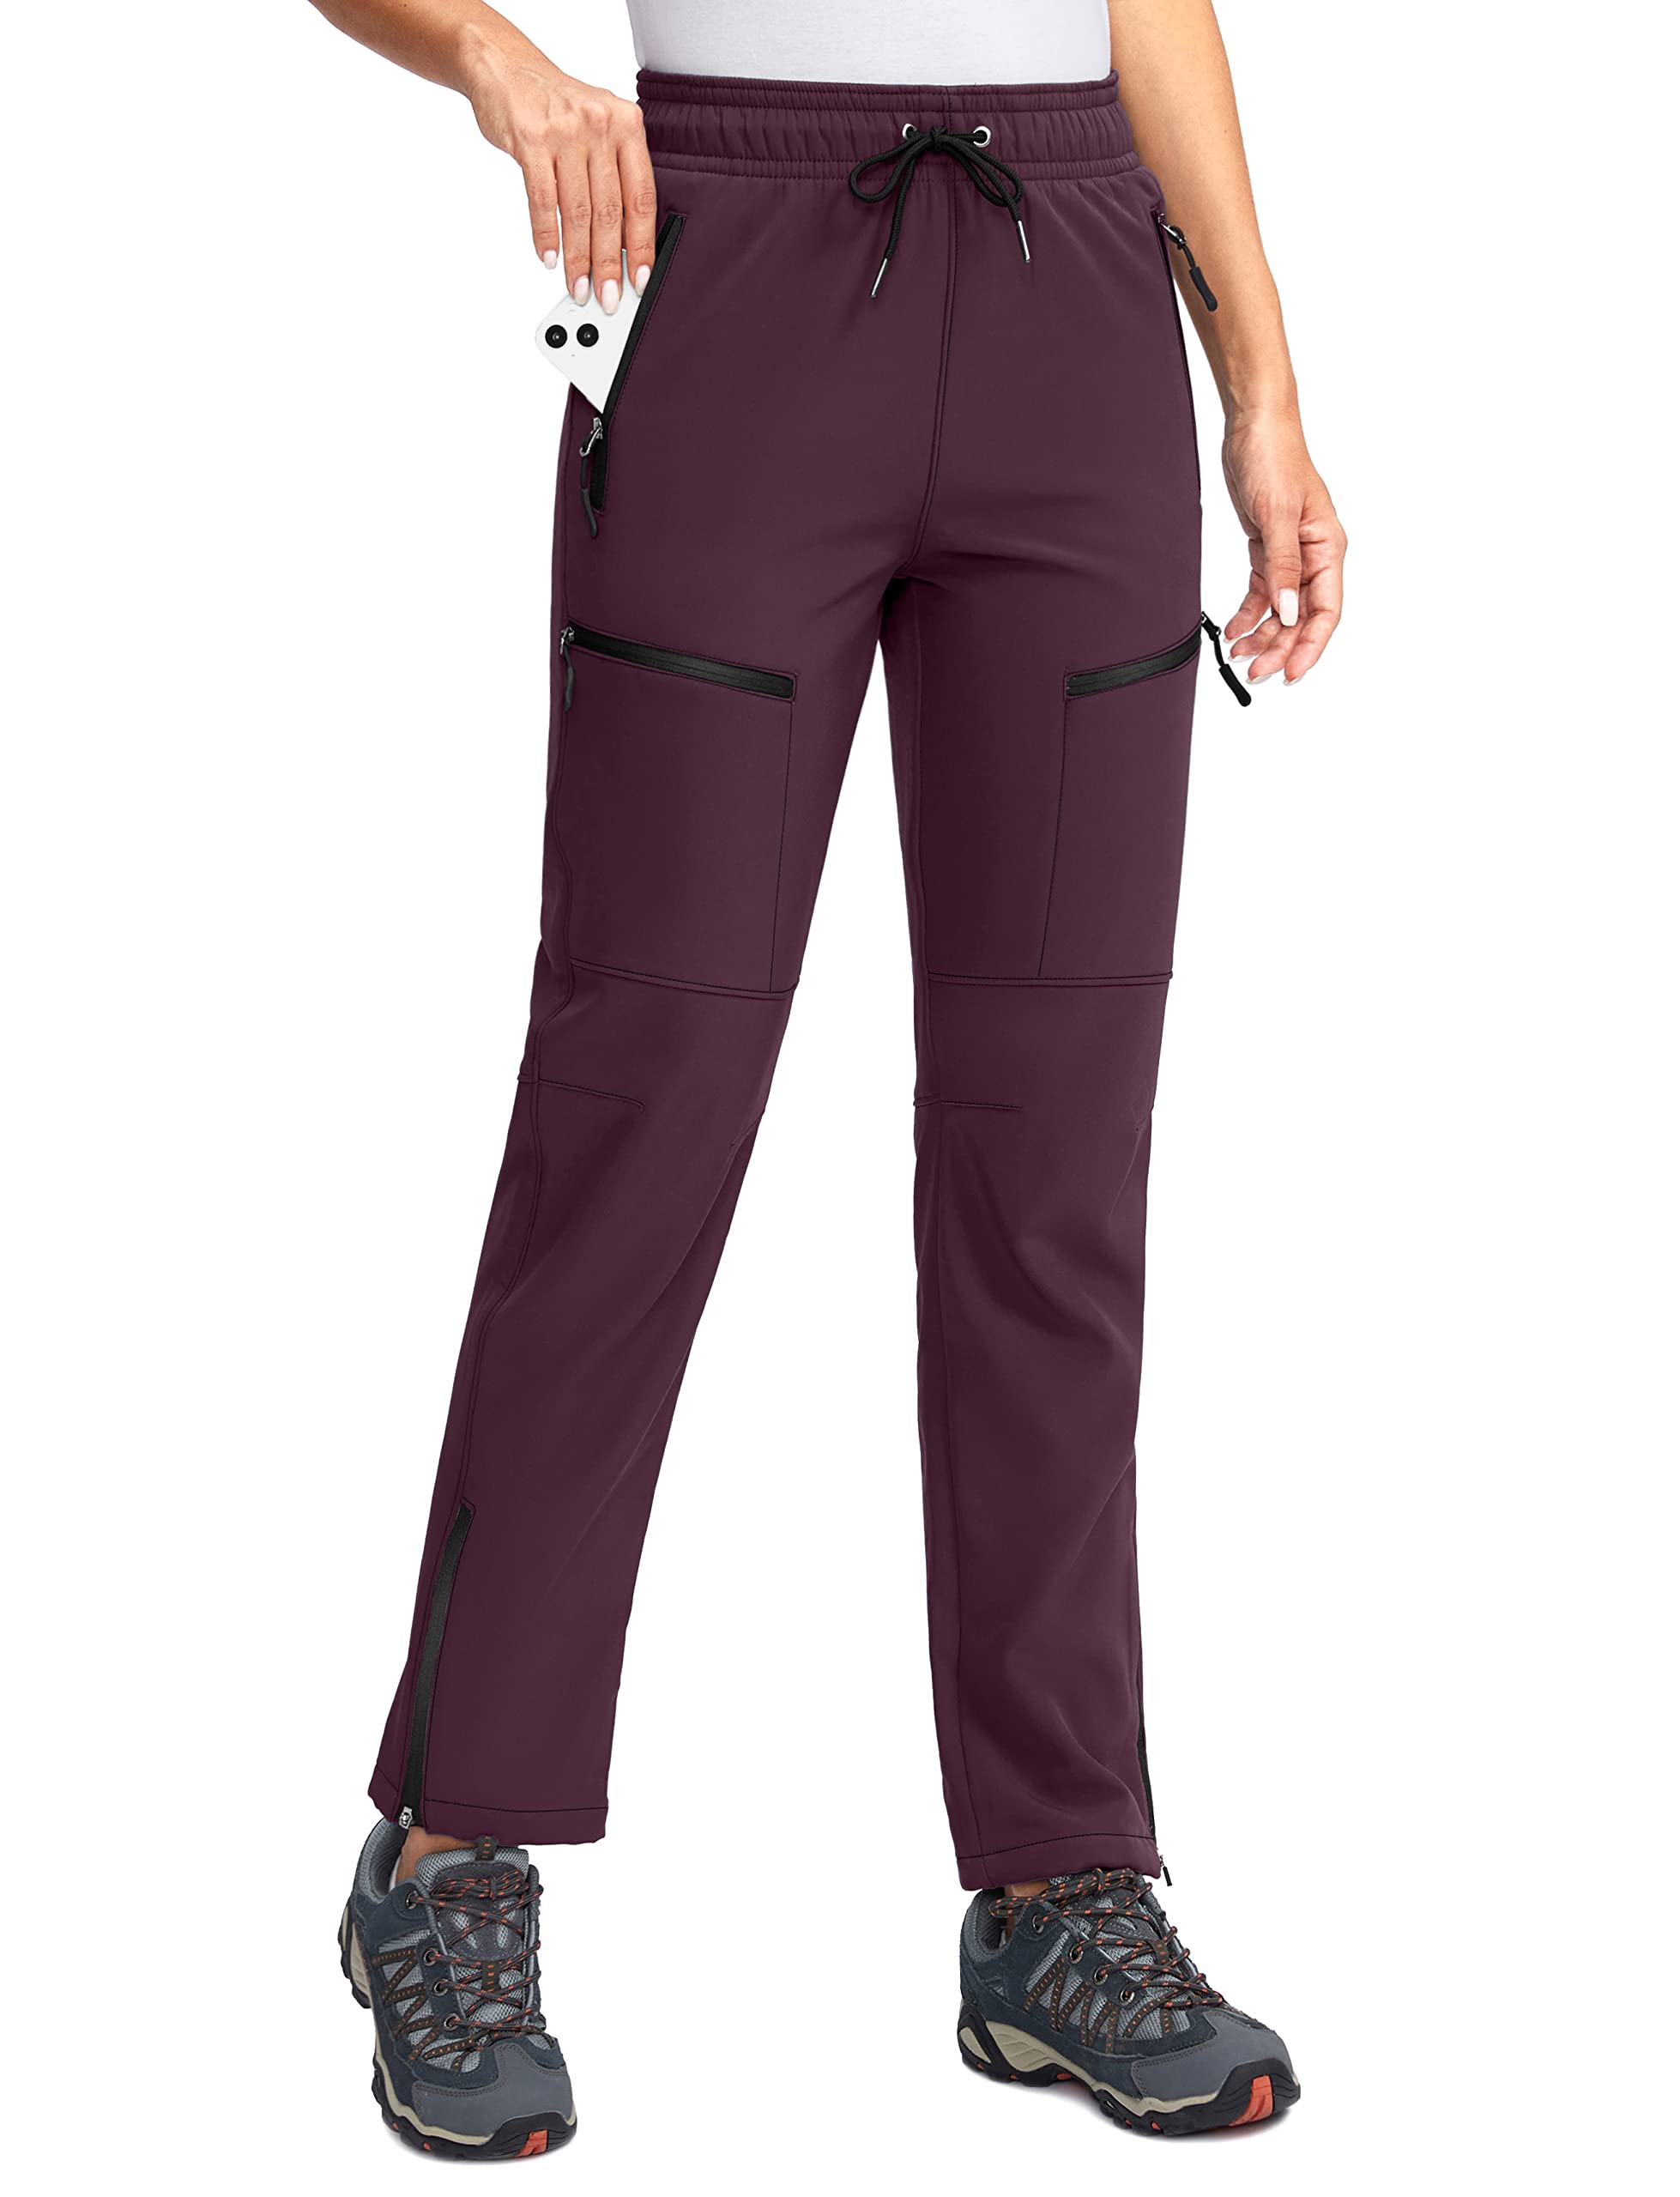 SANTINY Women's Fleece Lined Hiking Pants 4 Zipper Pockets Warm Winter  Softshell Snow Ski Pants Waterproof Insulated (Wine_M)